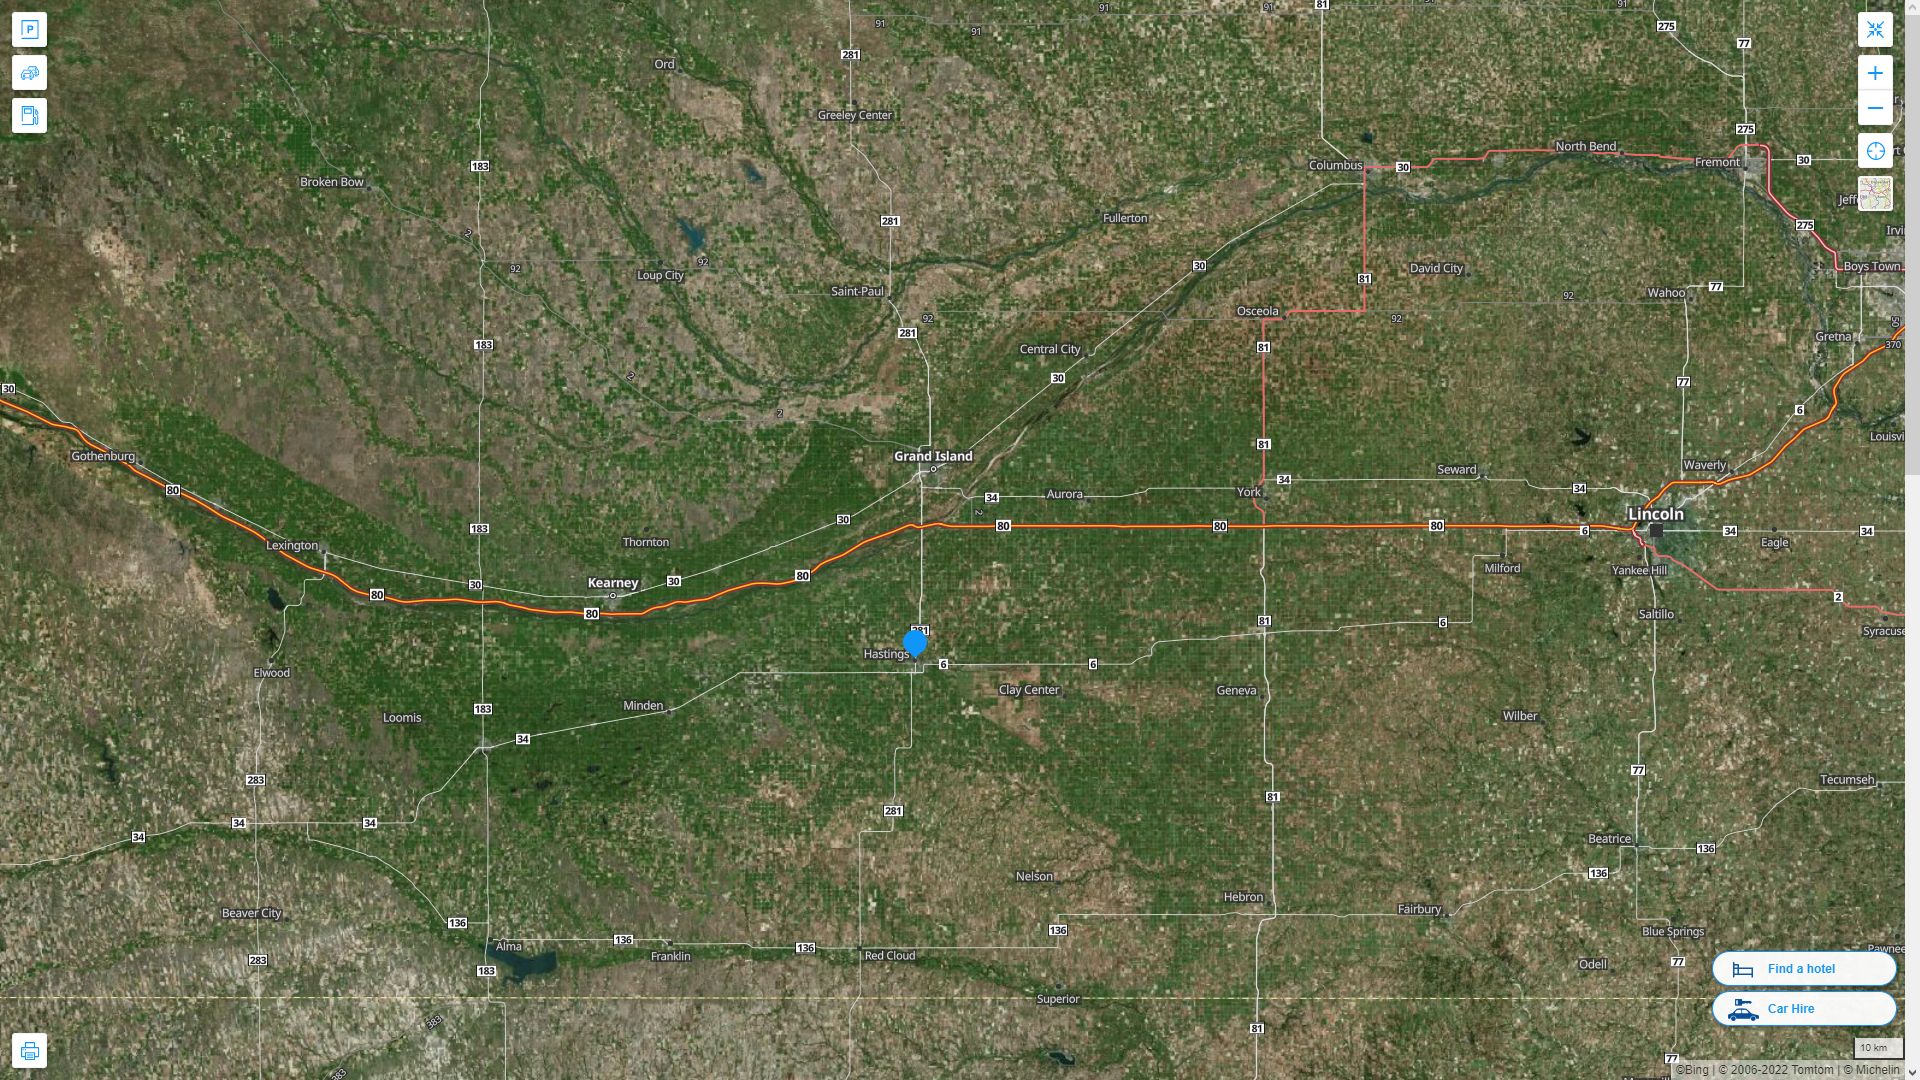 Hastings Nebraska Highway and Road Map with Satellite View